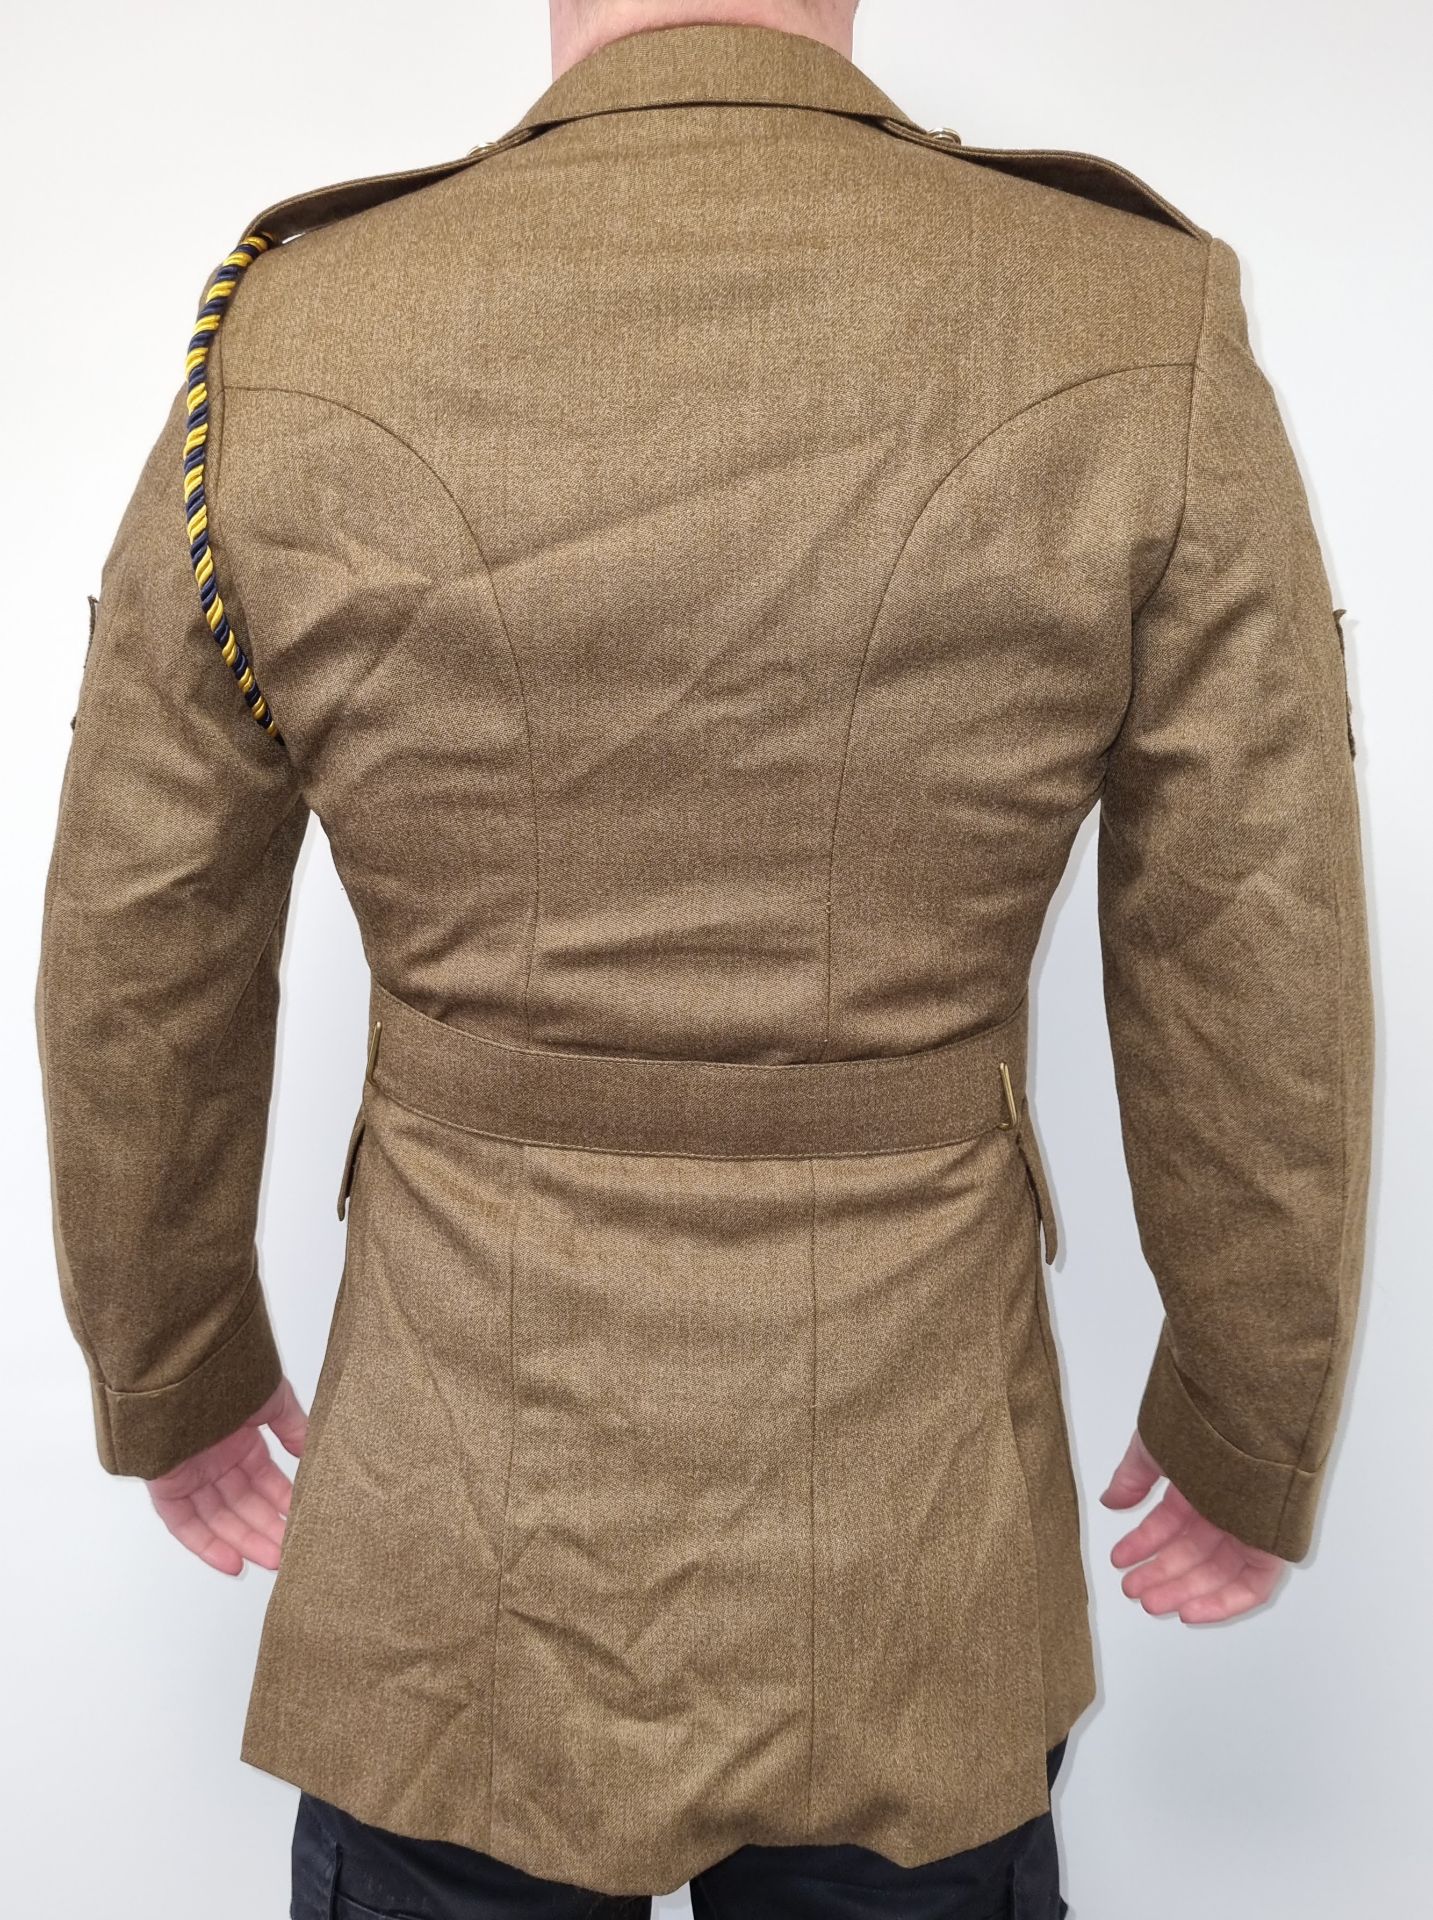 20x British Army No 2 dress jackets - mixed grades and sizes - Image 2 of 11